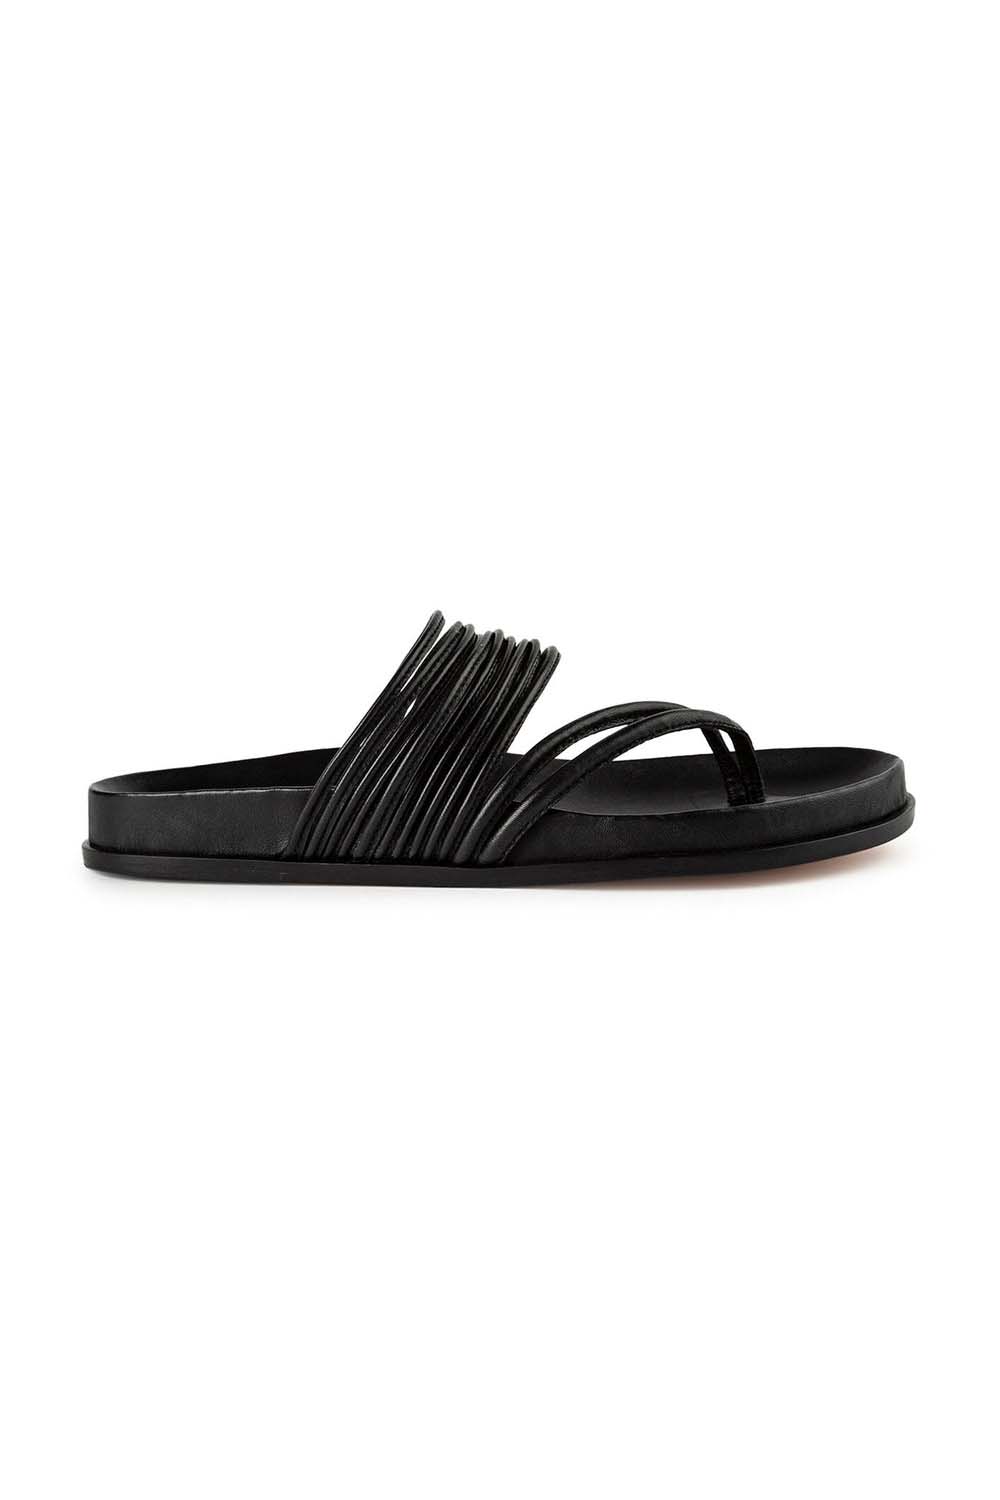 Black Tony Bianco Lamana 1.5cm Women's Sandals | 9041-CKBDJ